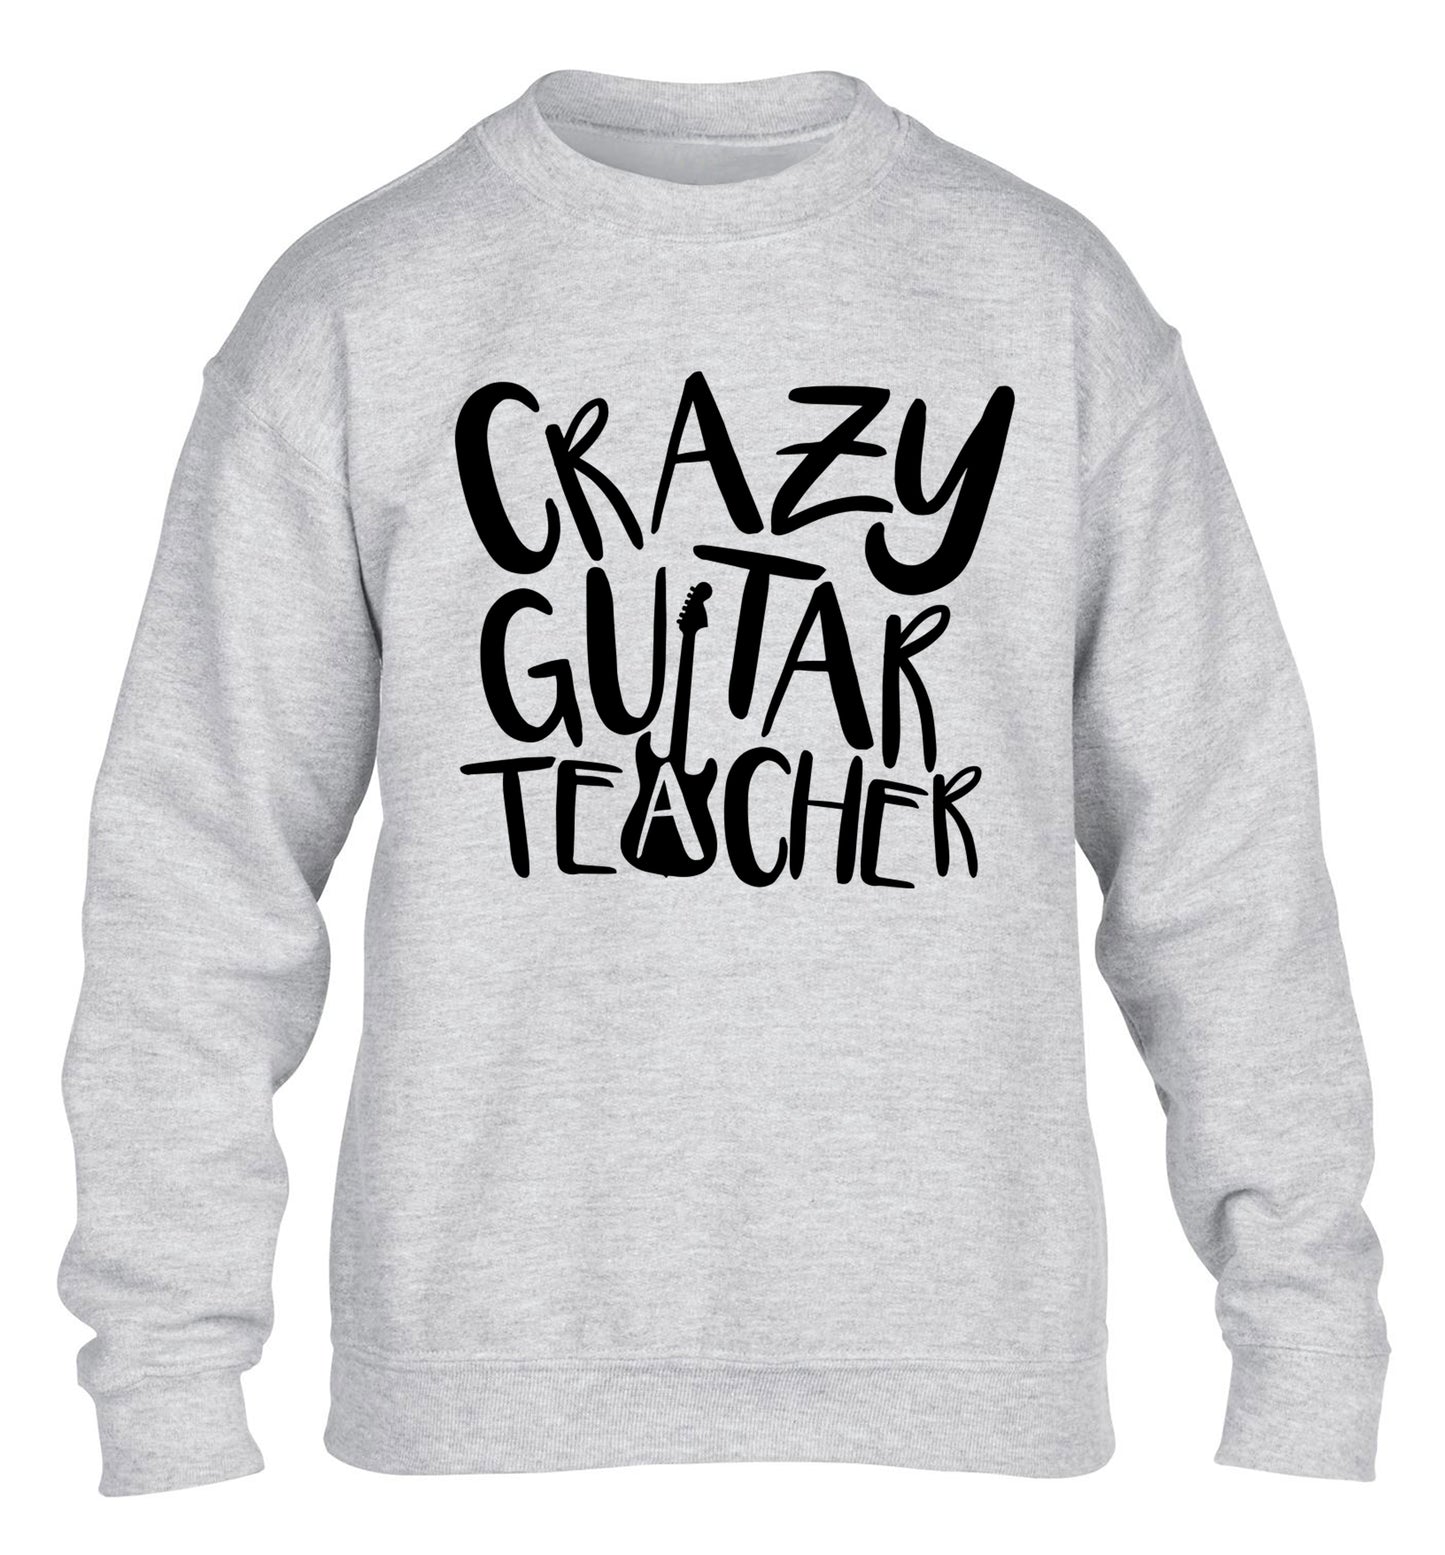 Crazy guitar teacher children's grey sweater 12-13 Years